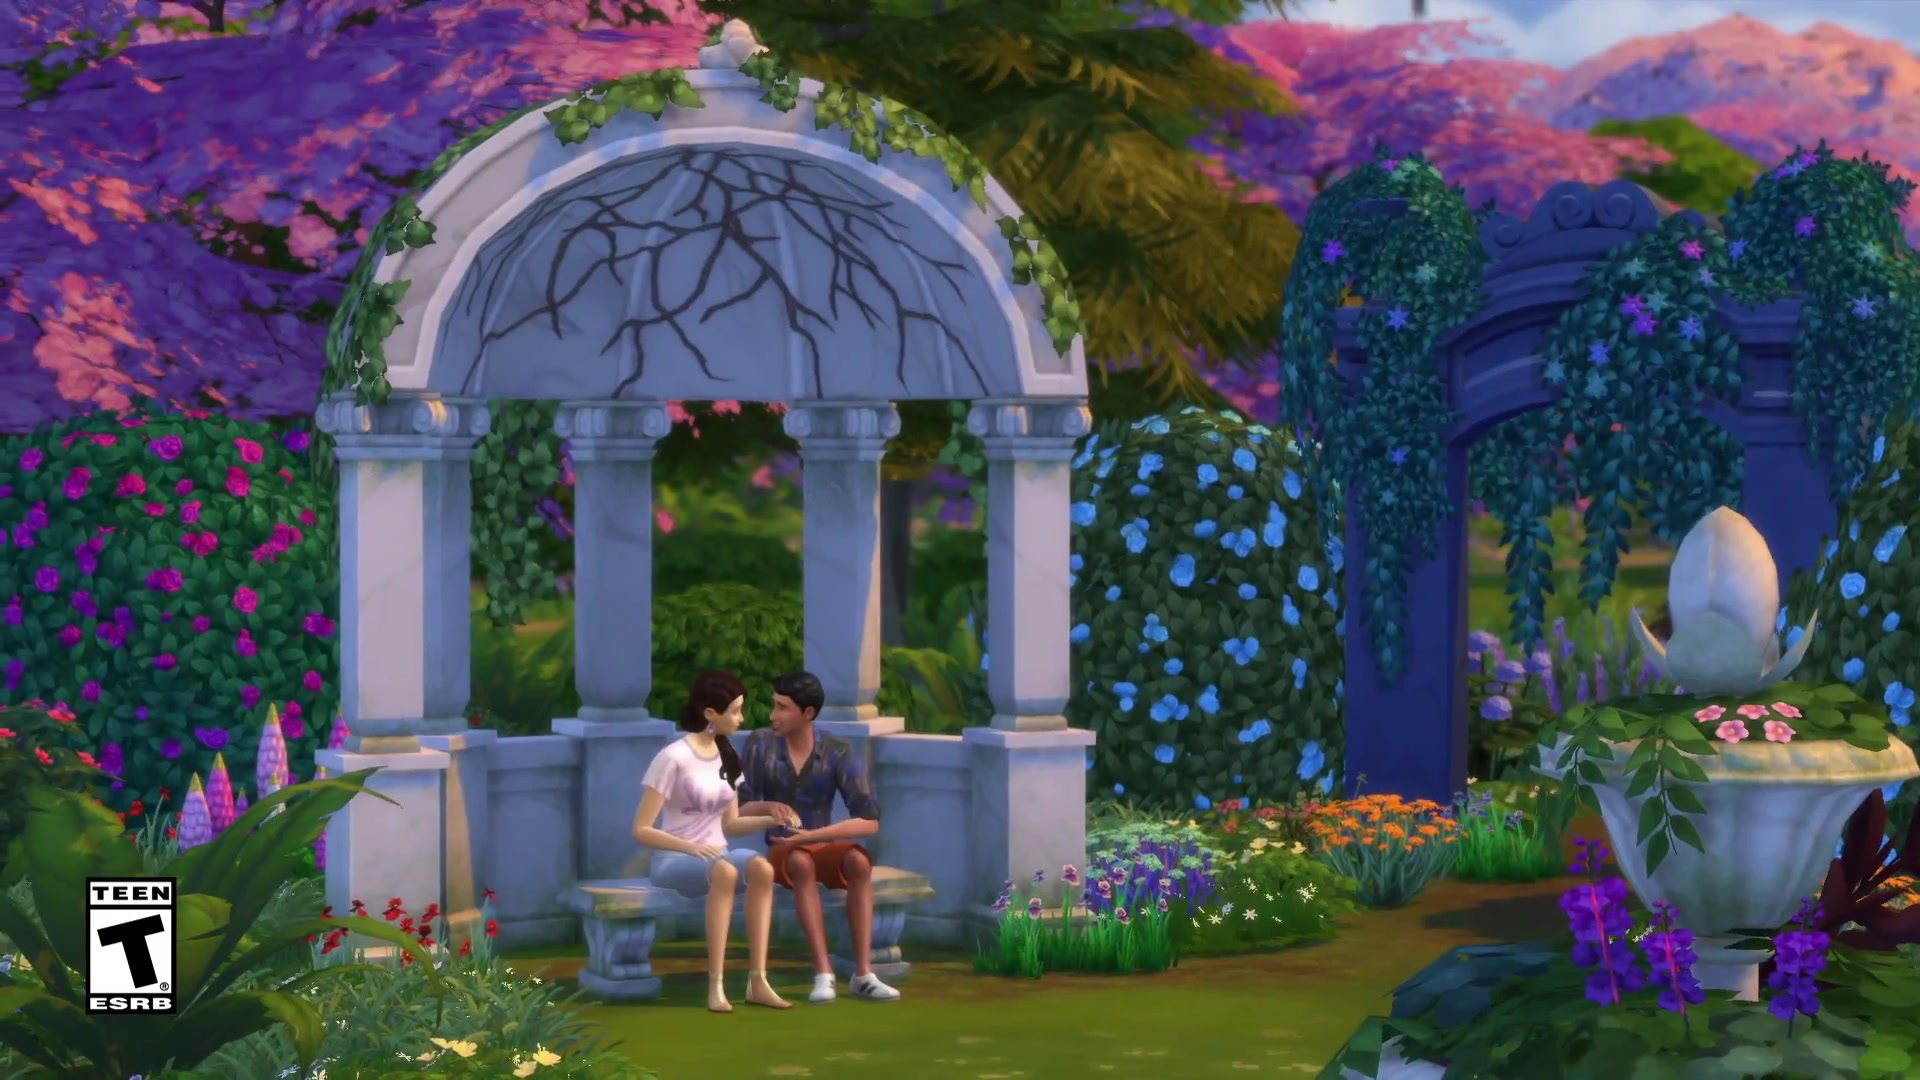 The Sims 4 Romantic Garden Stuff sims 4 40791001 1920 1080 Download The Sims 4 Romantic Garden for PC